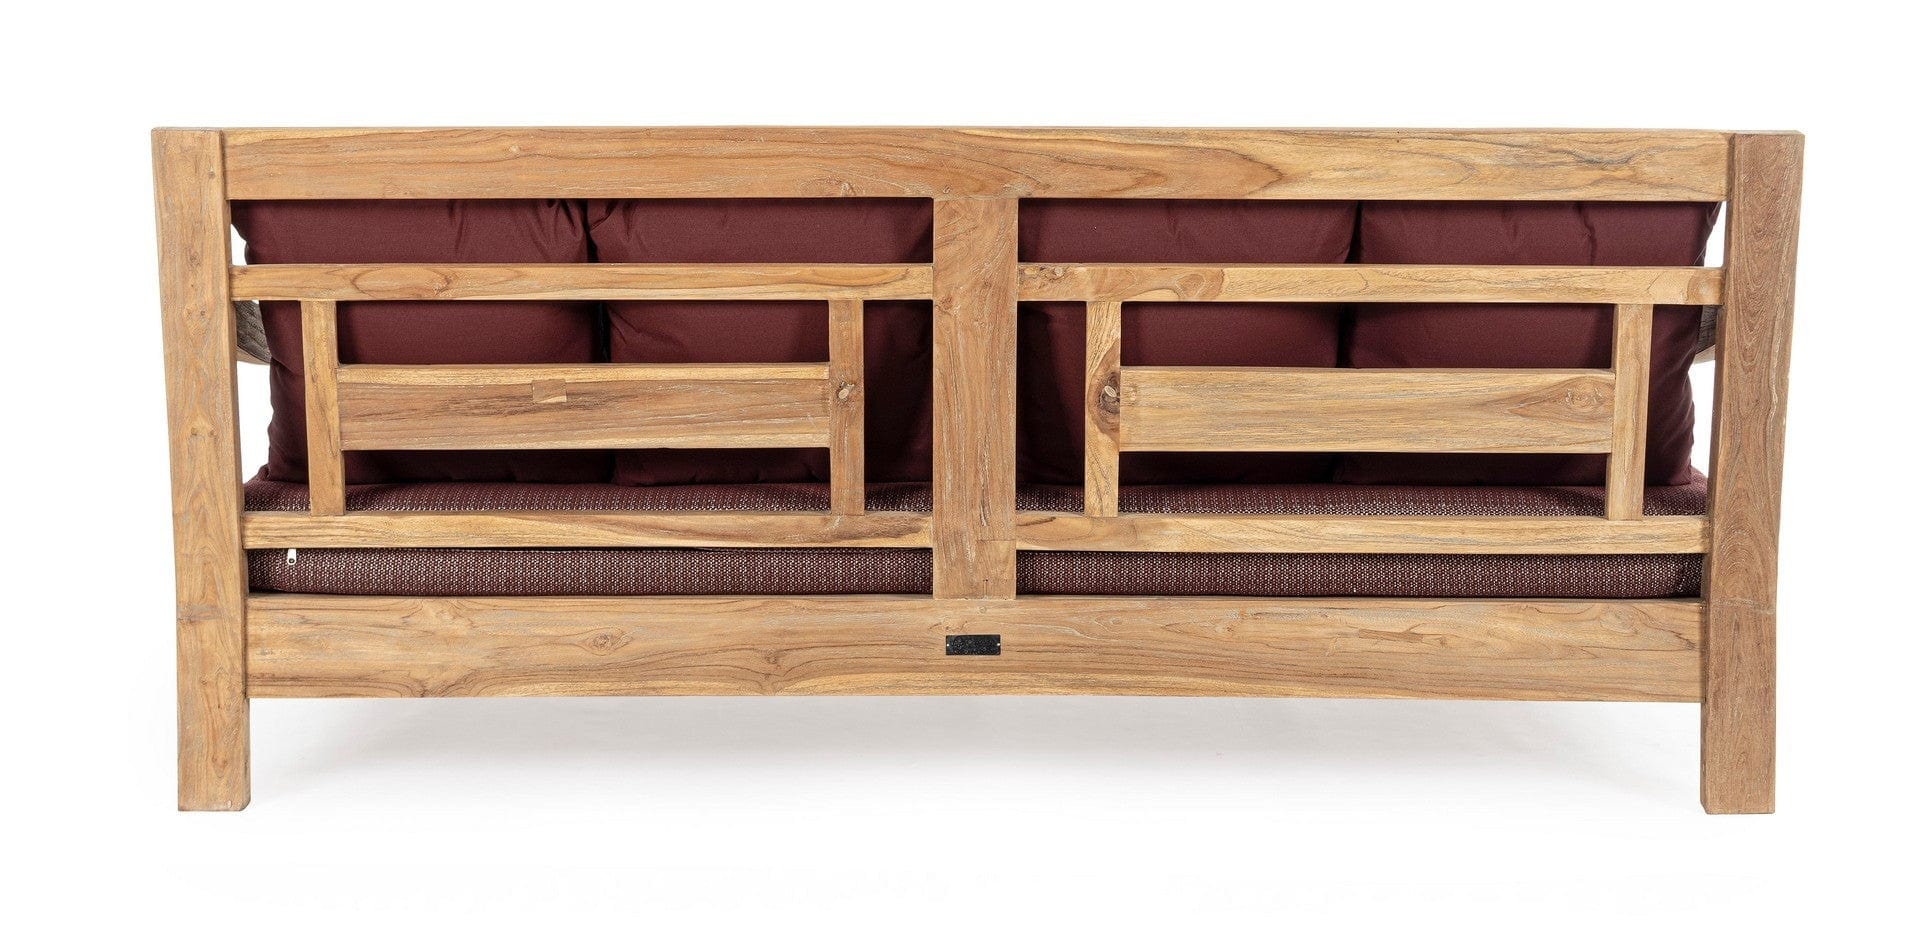 Bizzotto Canapea fixa pentru gradina / terasa, din lemn de tec, cu perne detasabile tapitate cu stofa, 3 locuri, Bali Burgundy / Natural, l190xA112xH81 cm